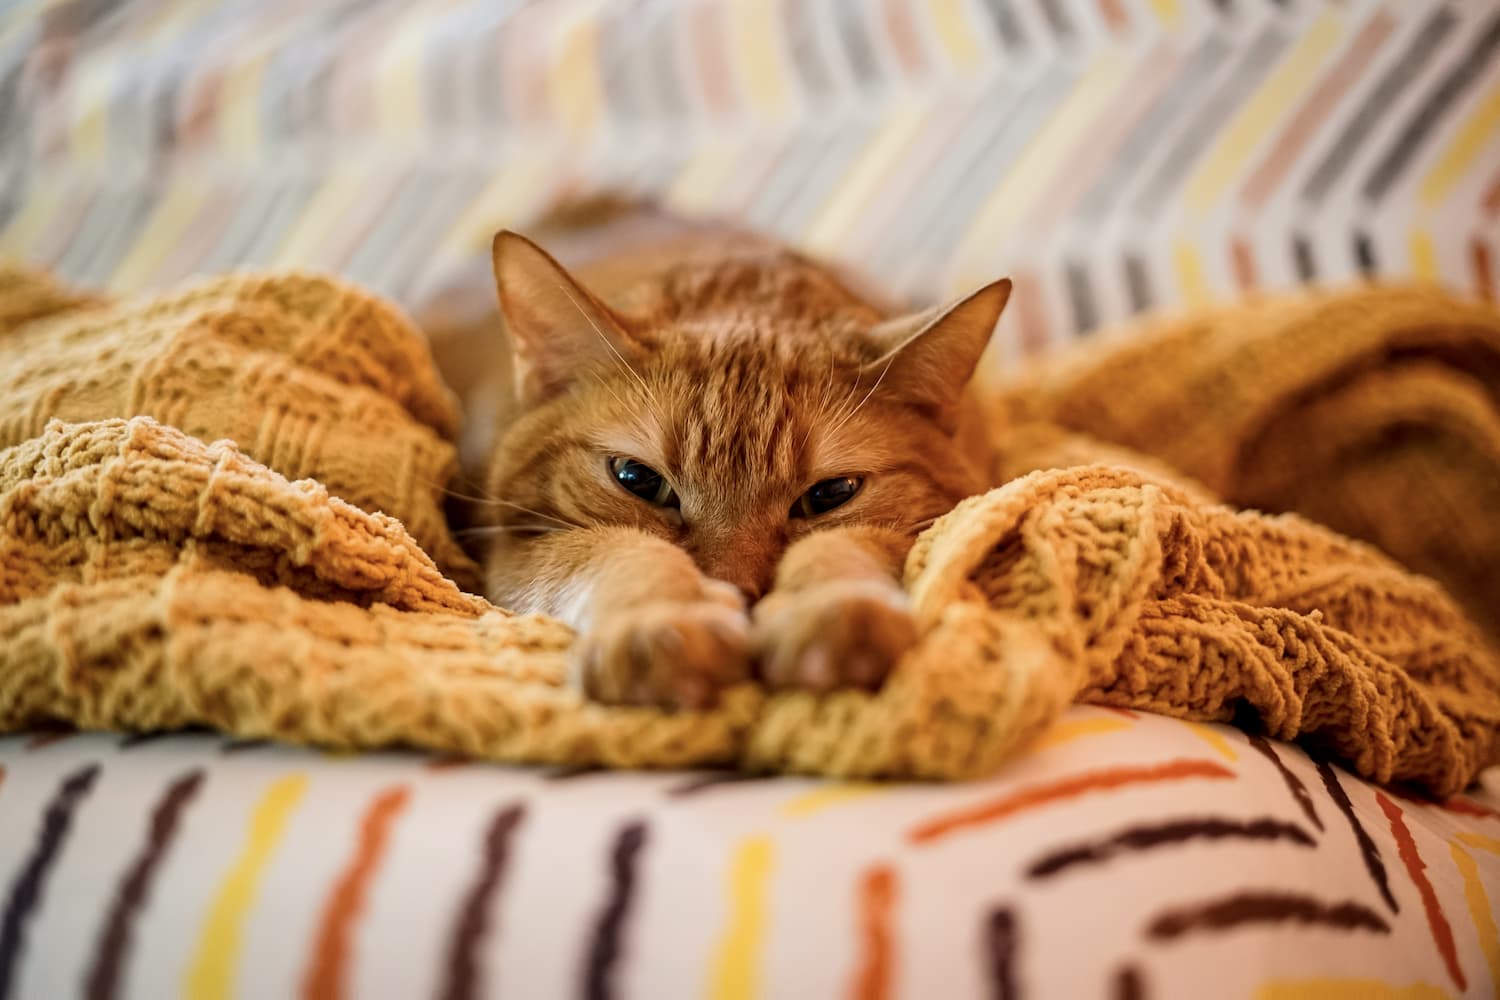 an-orange-tabby-cat-stretching-on-a-yellow-blanket-2022-03-19-02-24-58-utc-1